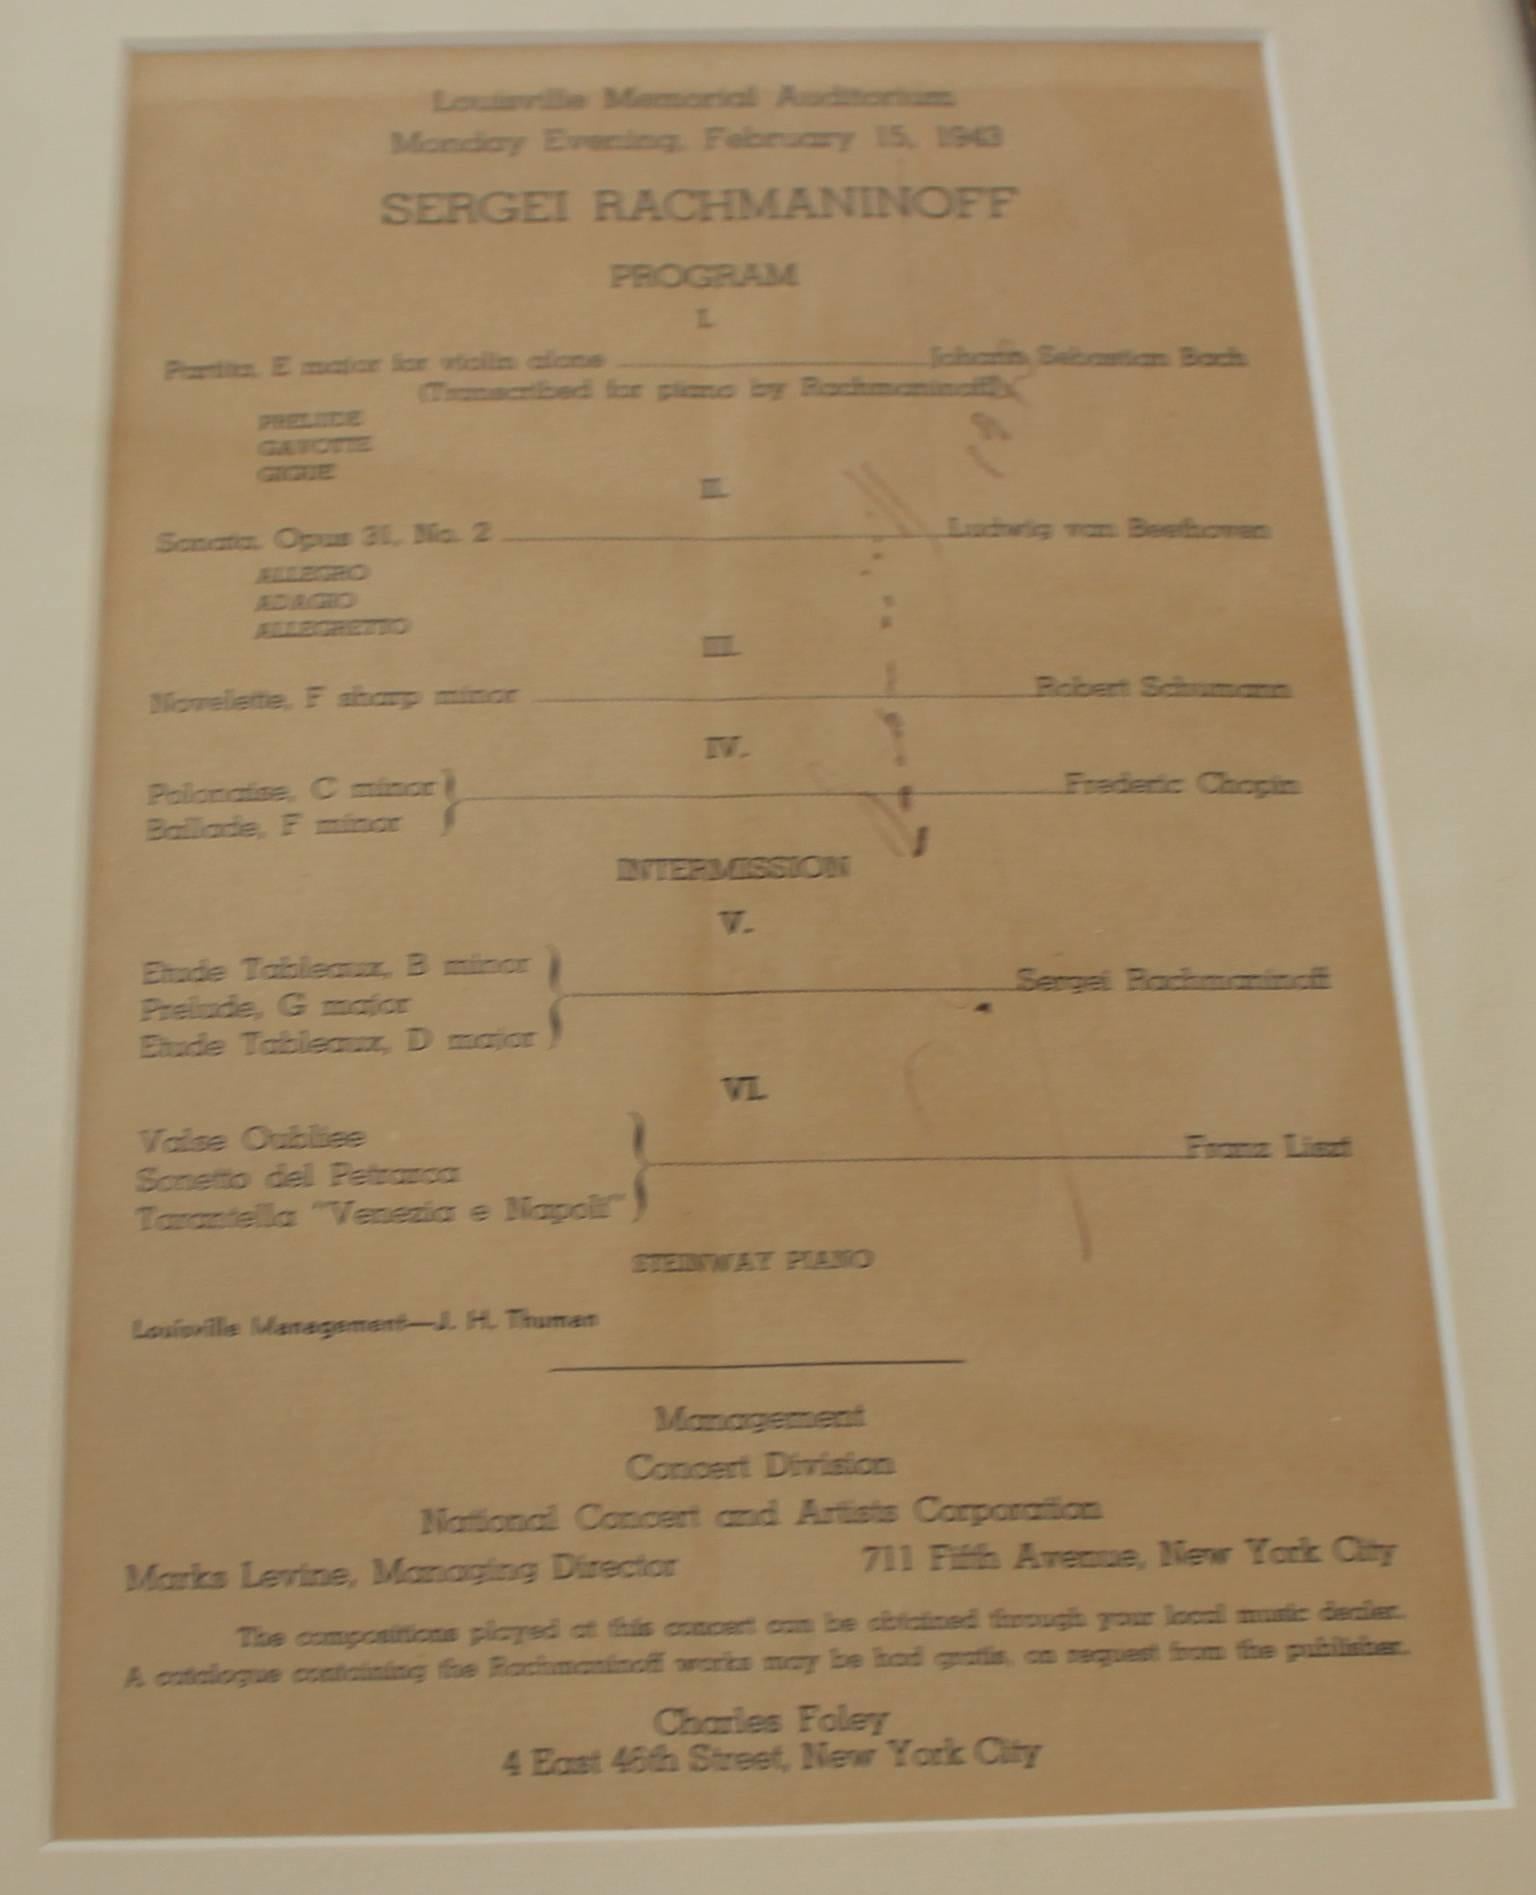 American Sergei Rachmaninoff Autographed Program 1943